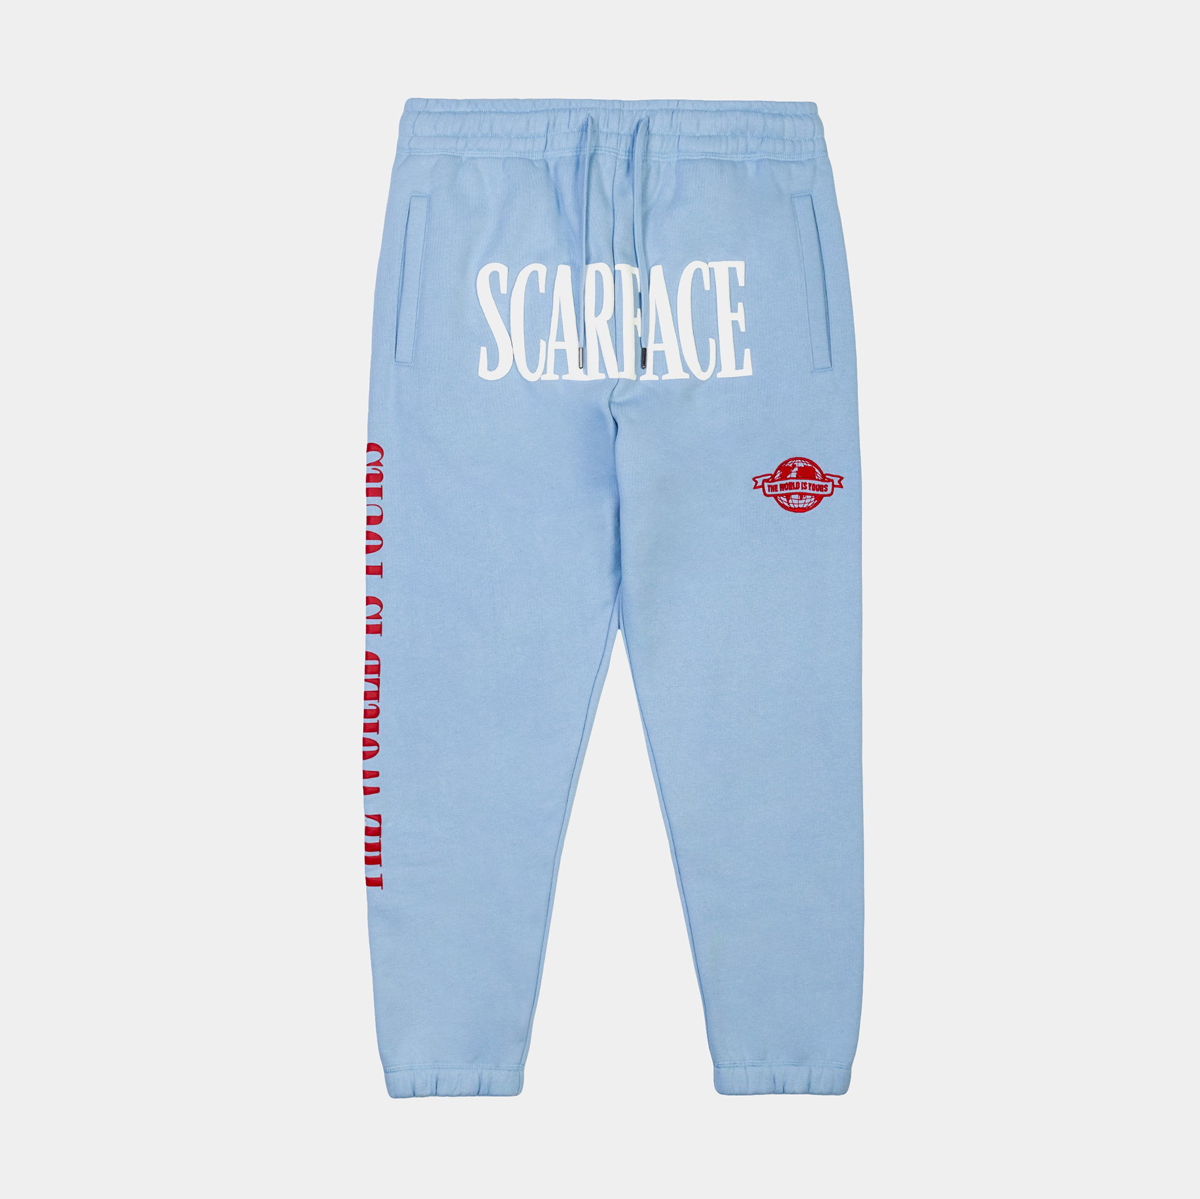 Scarface-Shoe-Palace-Pants-1